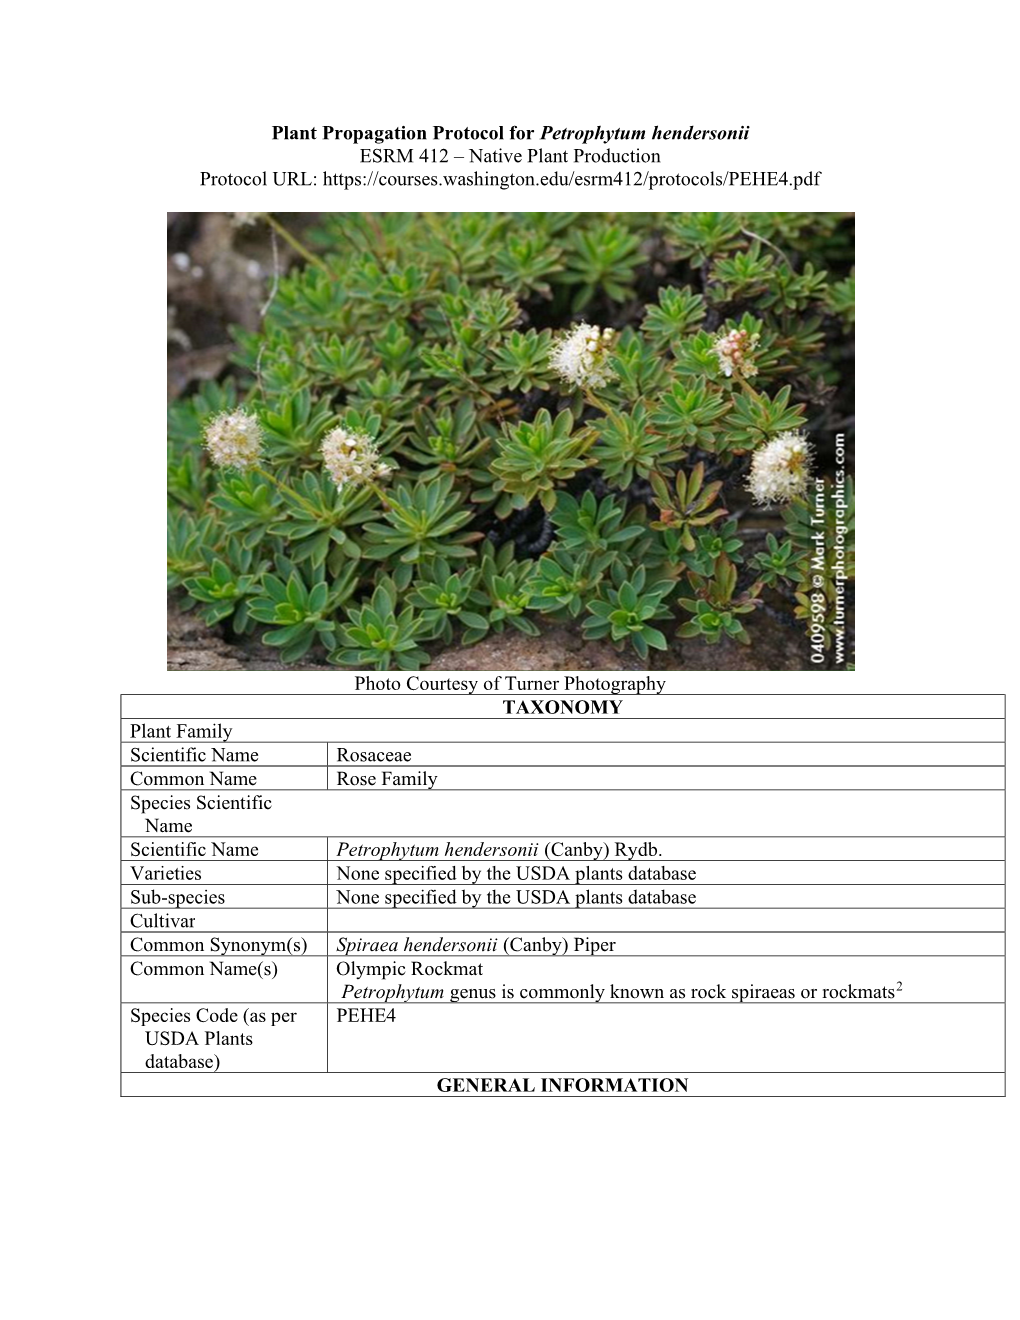 Plant Propagation Protocol for Petrophytum Hendersonii ESRM 412 – Native Plant Production Protocol URL